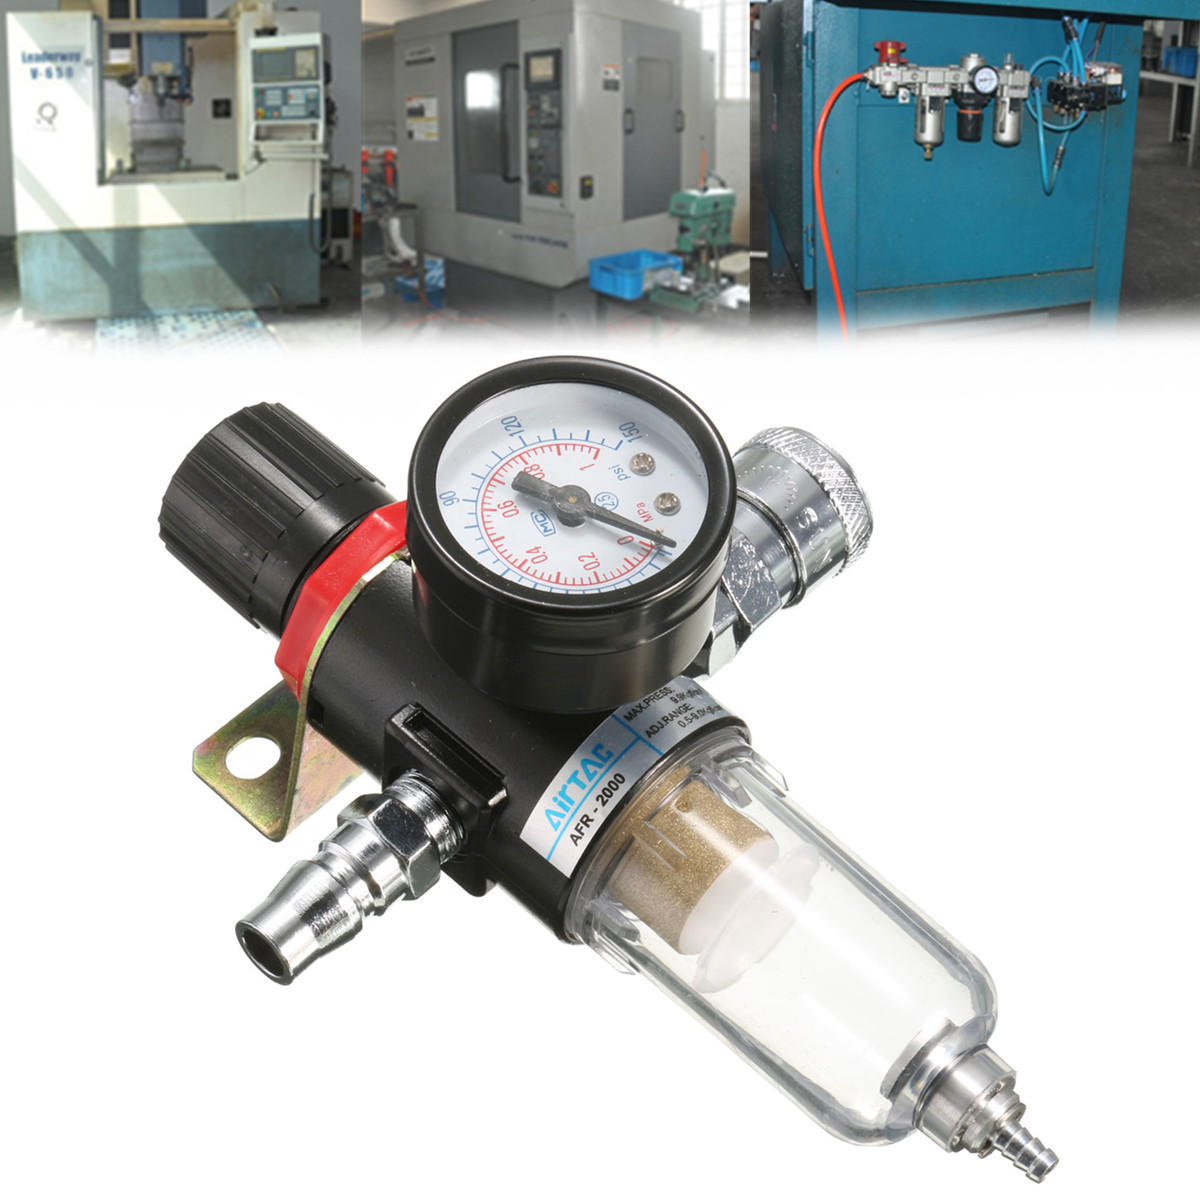 AFR2000 1/4" Air Compressor Filter Water Separator Trap Tools Kit Regulator 